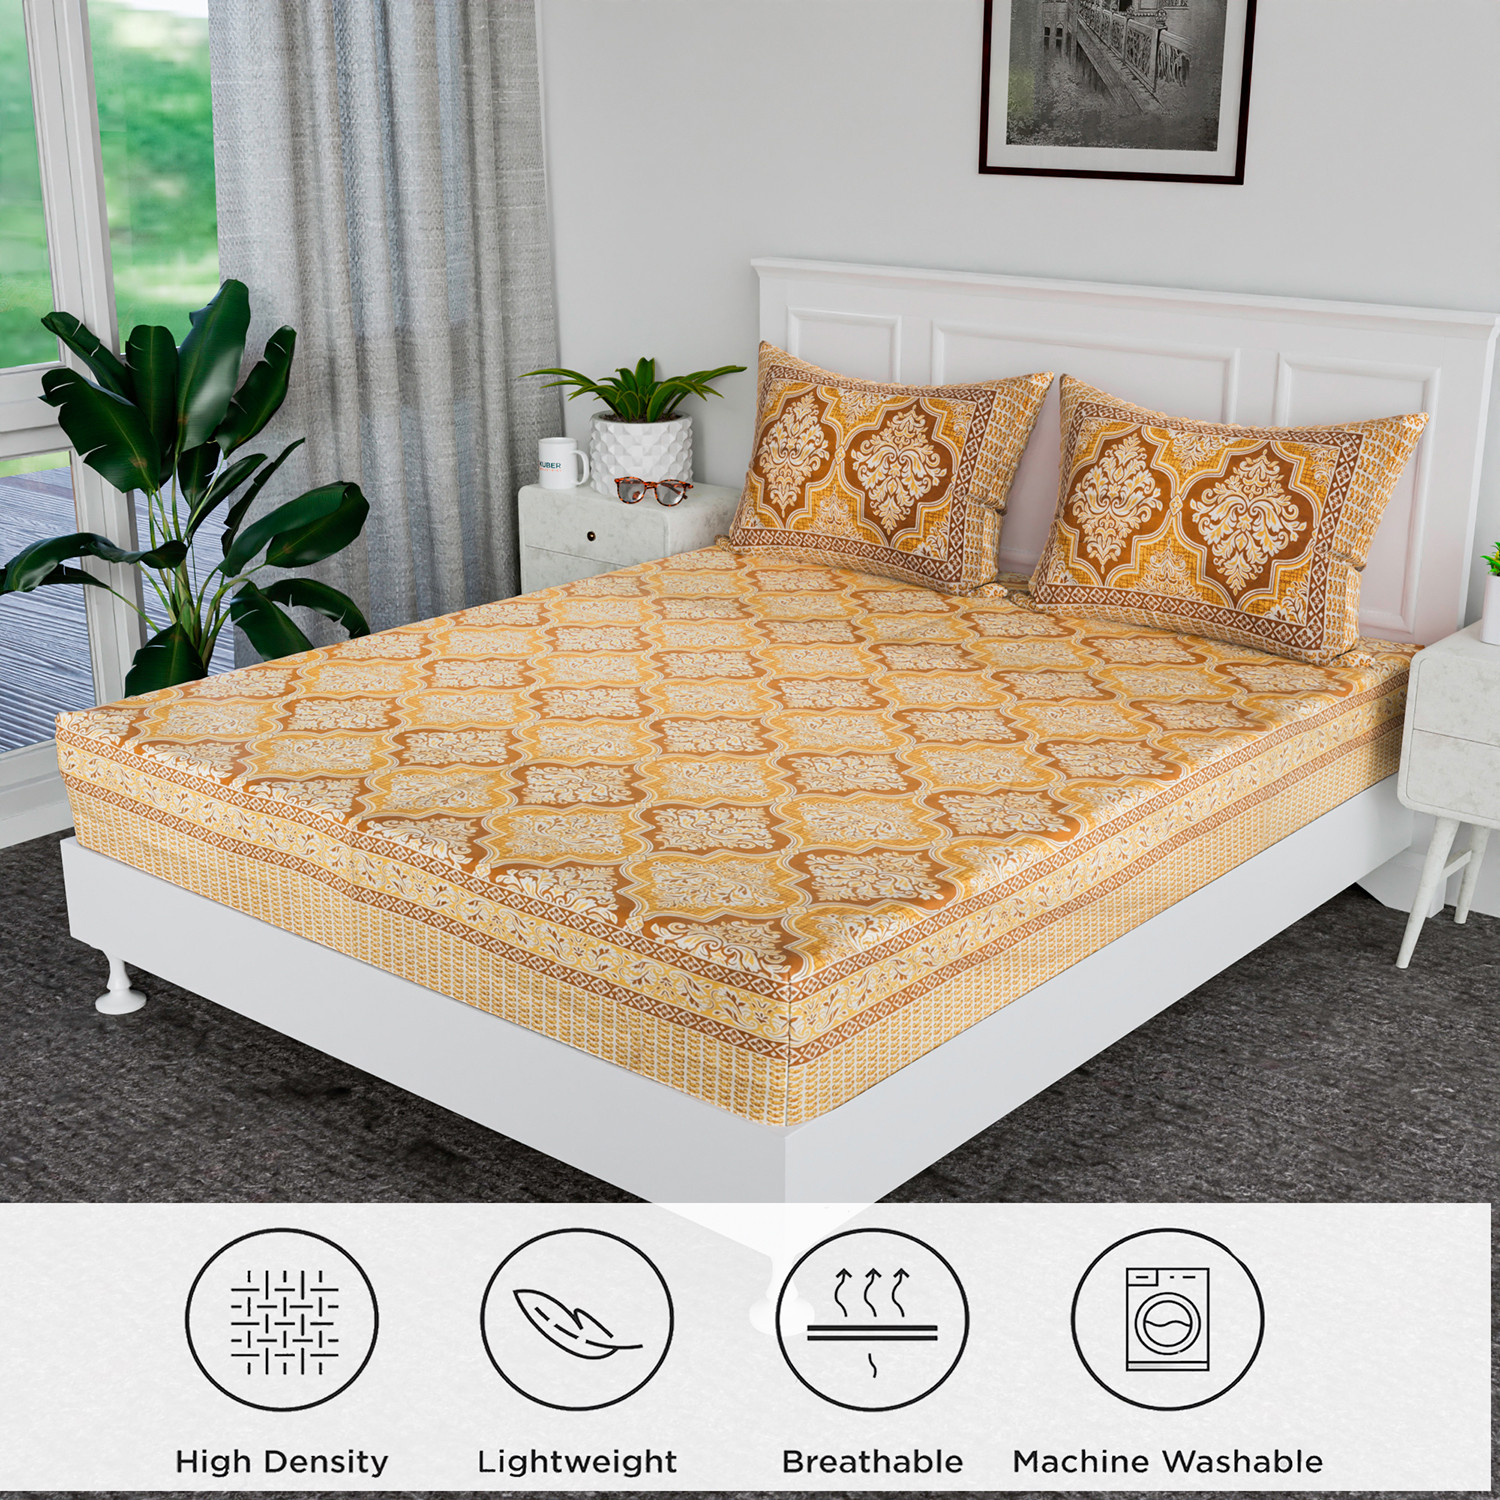 Kuber Industries Double Bedsheet | Premium Cotton Bedsheet with 2 Pillow Covers | Bedsheet for Bedroom | Bedsheet for Double Bed | Flower Heritage | 90x108 Inch | Brown